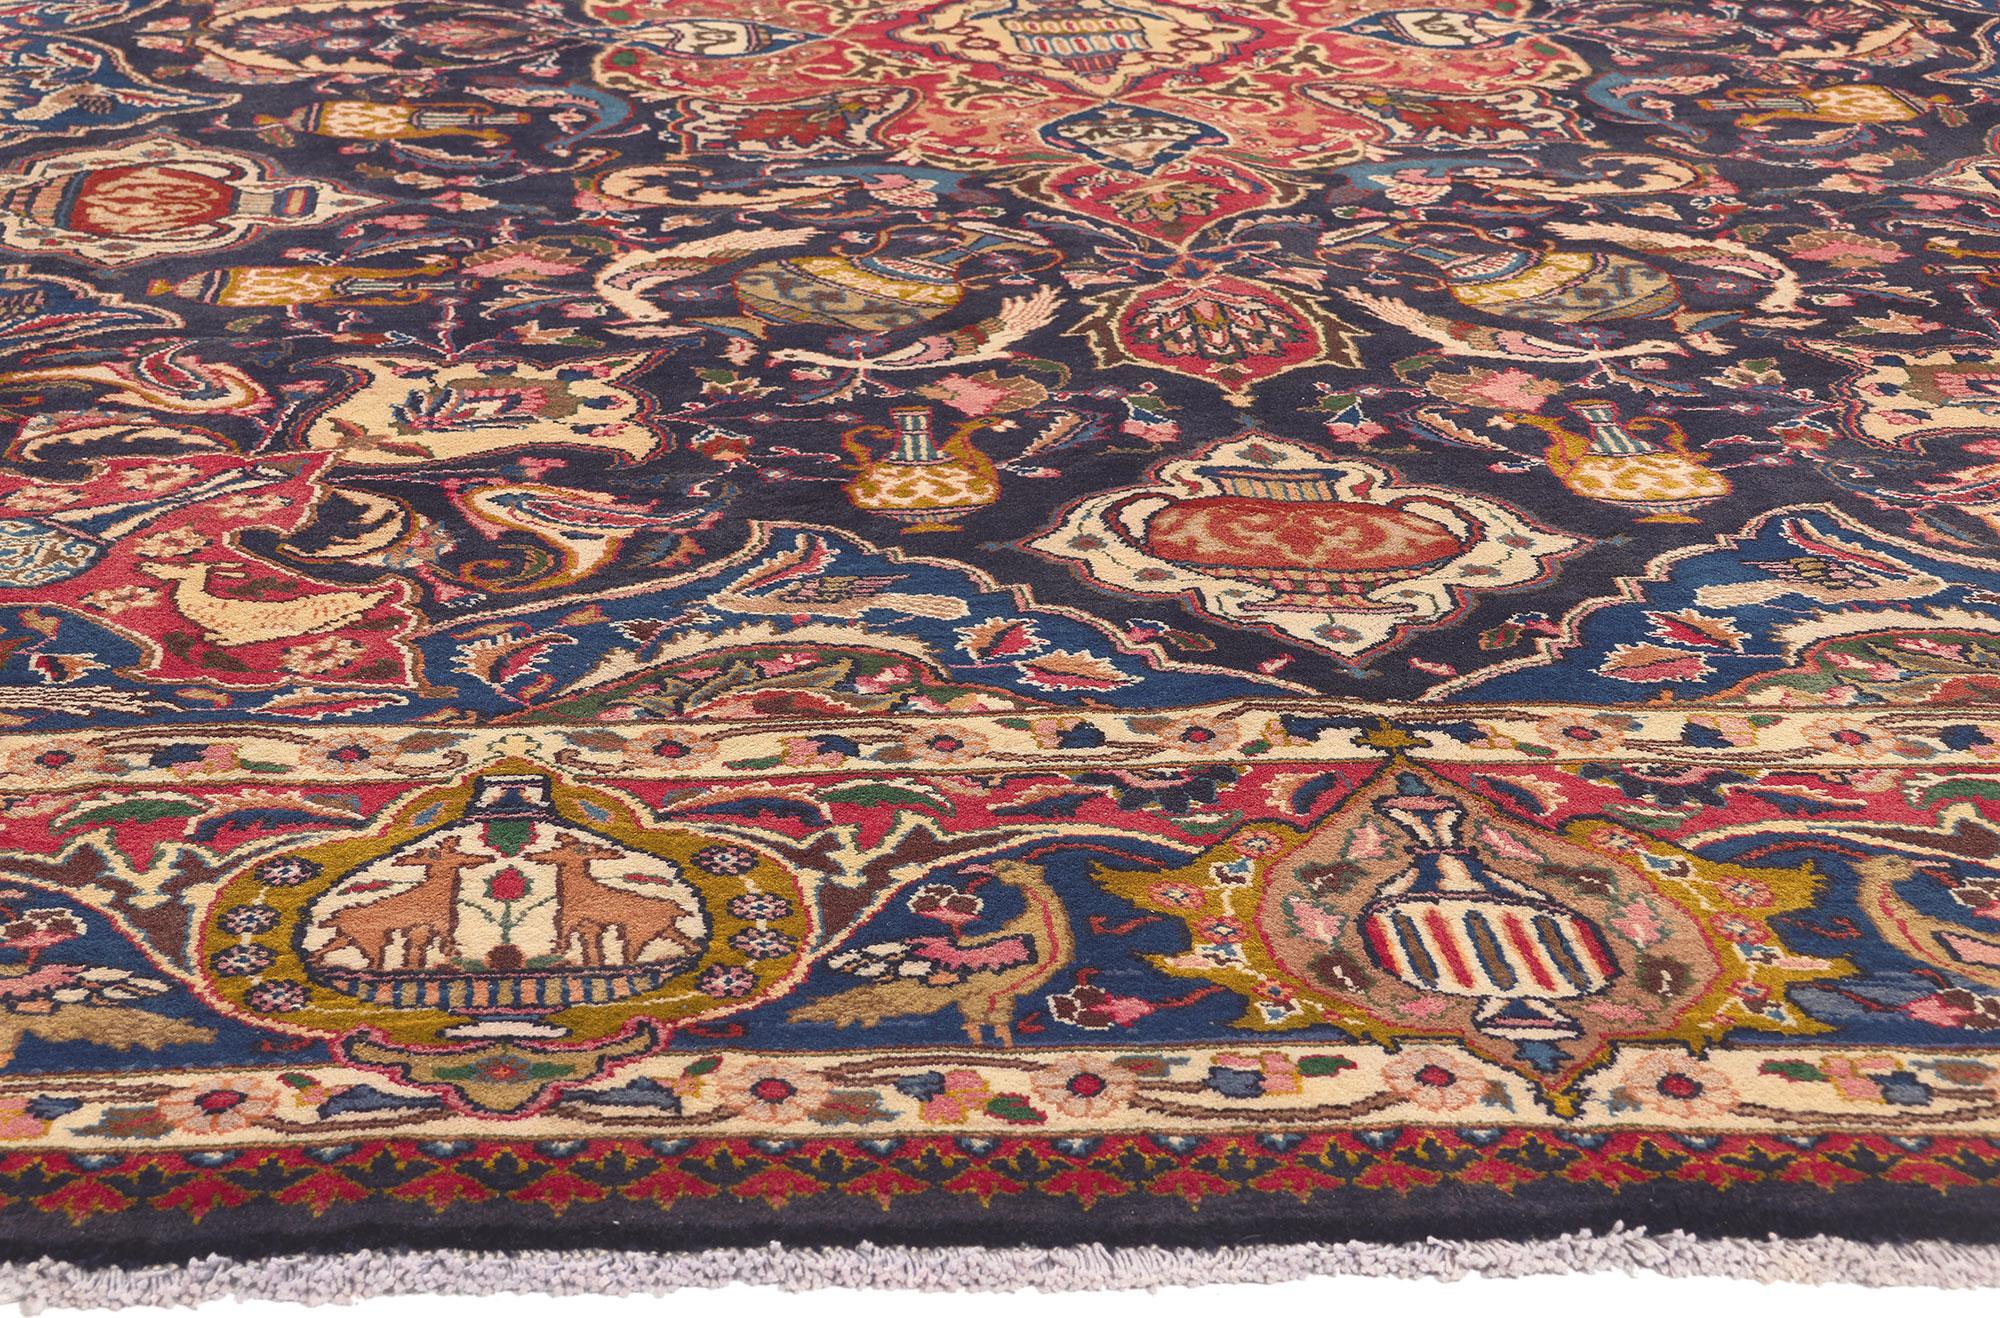 Vintage Persian Zir Khaki Mashhad Rug, Art Nouveau Meets Worldly Treasures In Good Condition For Sale In Dallas, TX